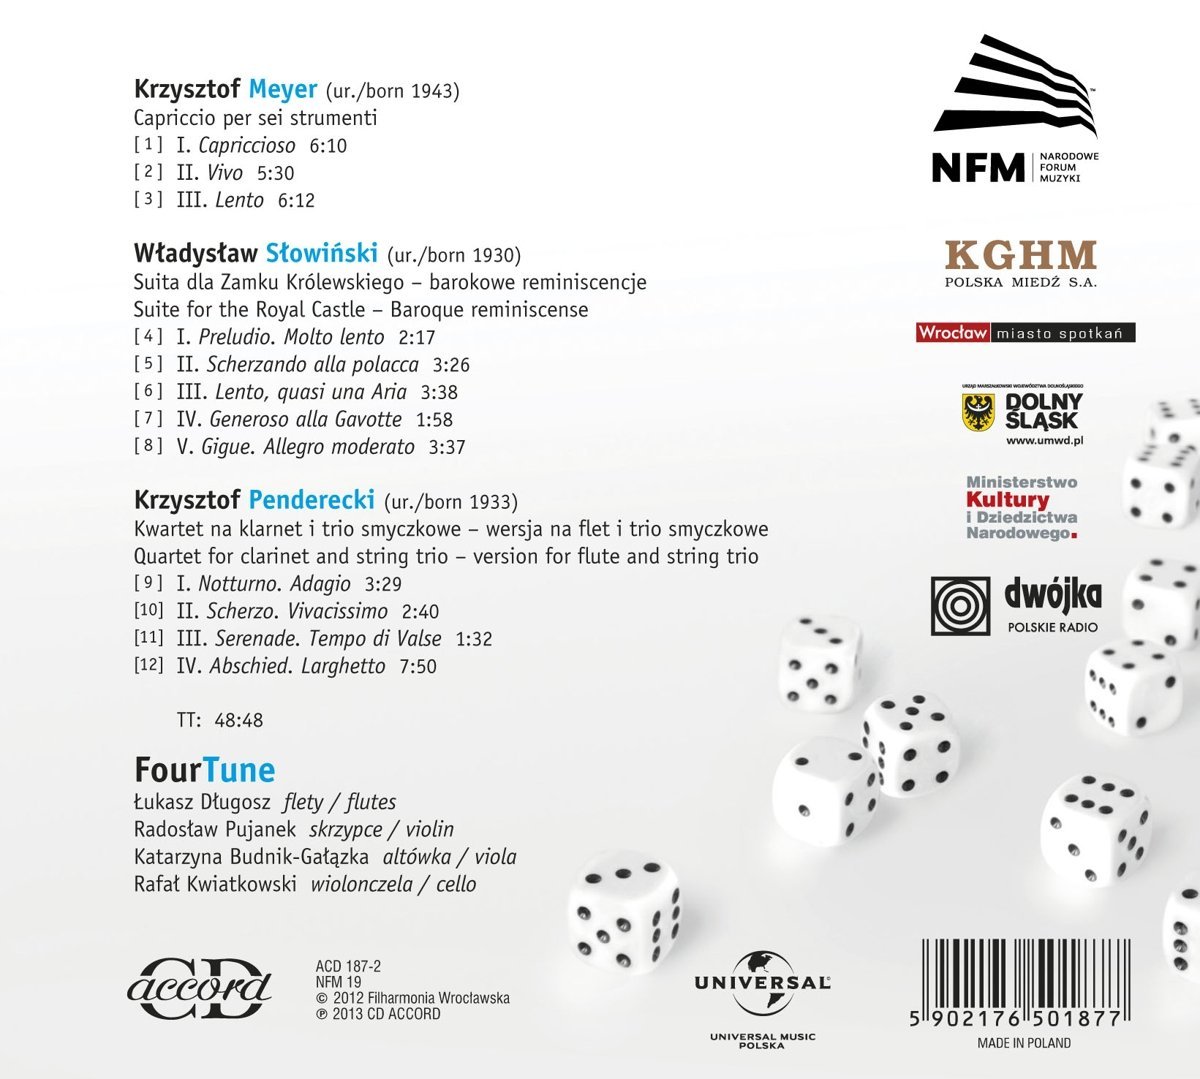 Fourtune: Polish Flute Quartets - by K. Meyer; Slowinski; Penderecki / Lukasz Dlugosz, flutes; Radosllw Pujanek, violin; Budnik-Galazka; Kwiatkowski back cover